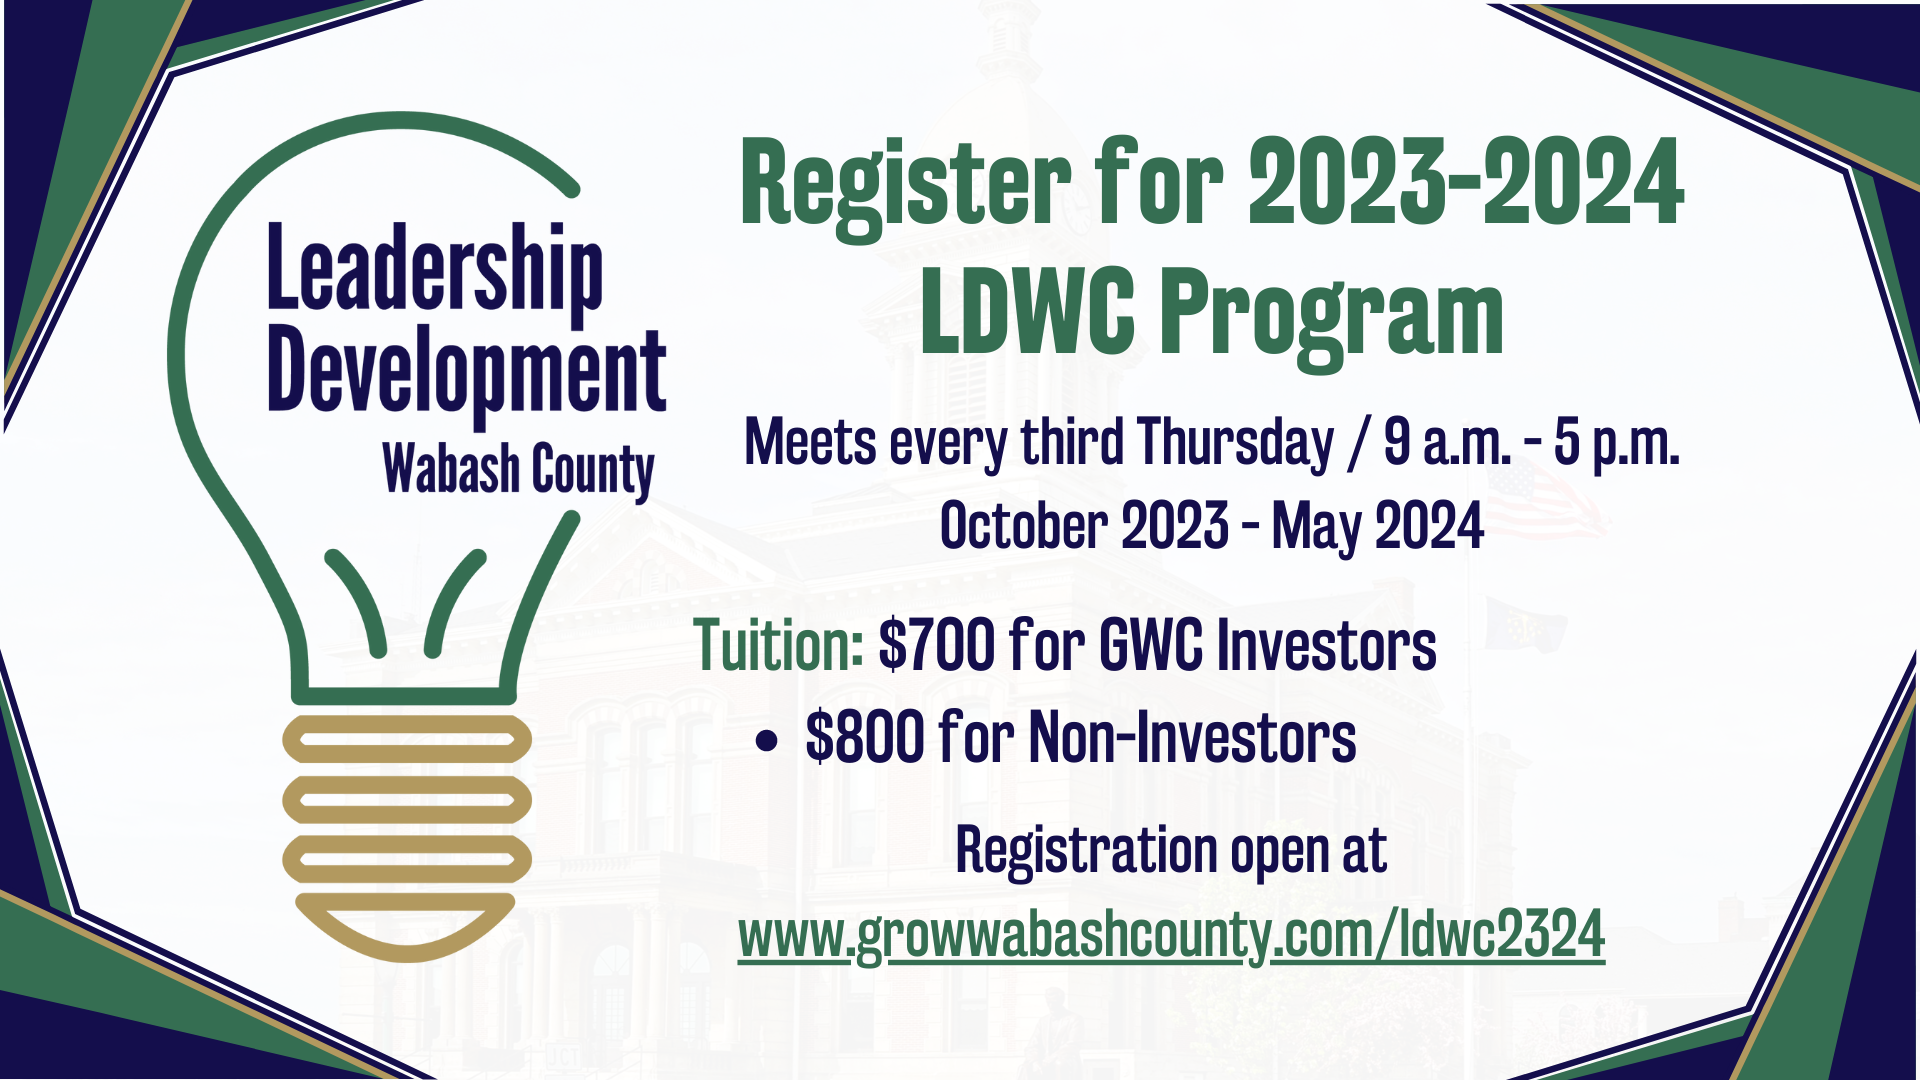 Registration open for Leadership Development 2023 - 2024 cohort Photo